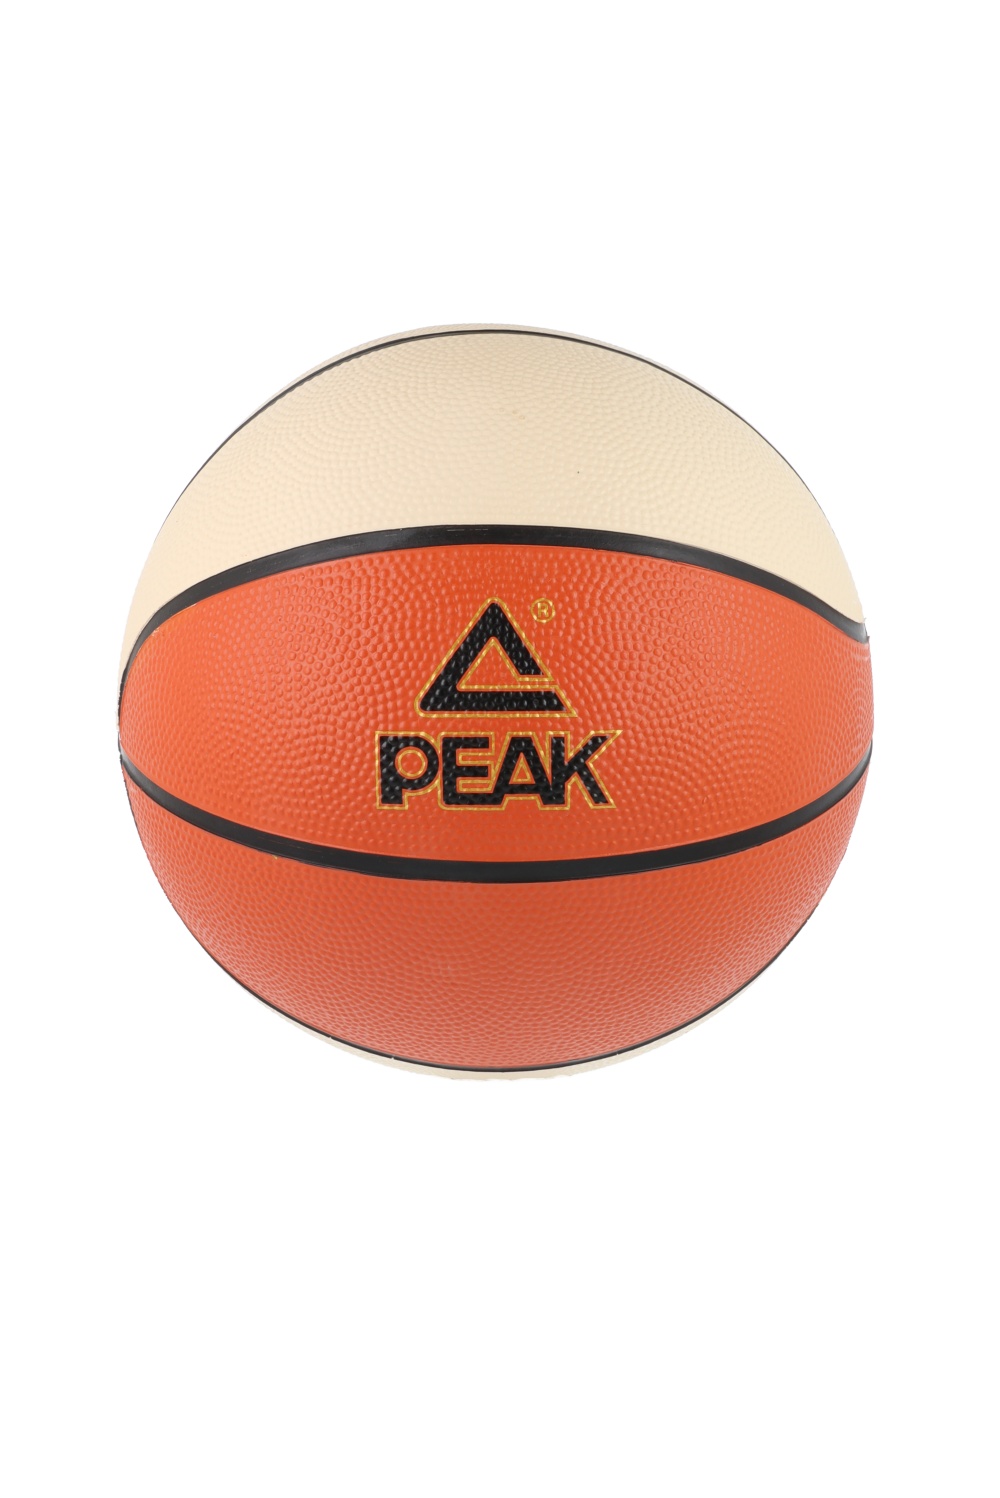 PEAK Basketball Gummi Size 5